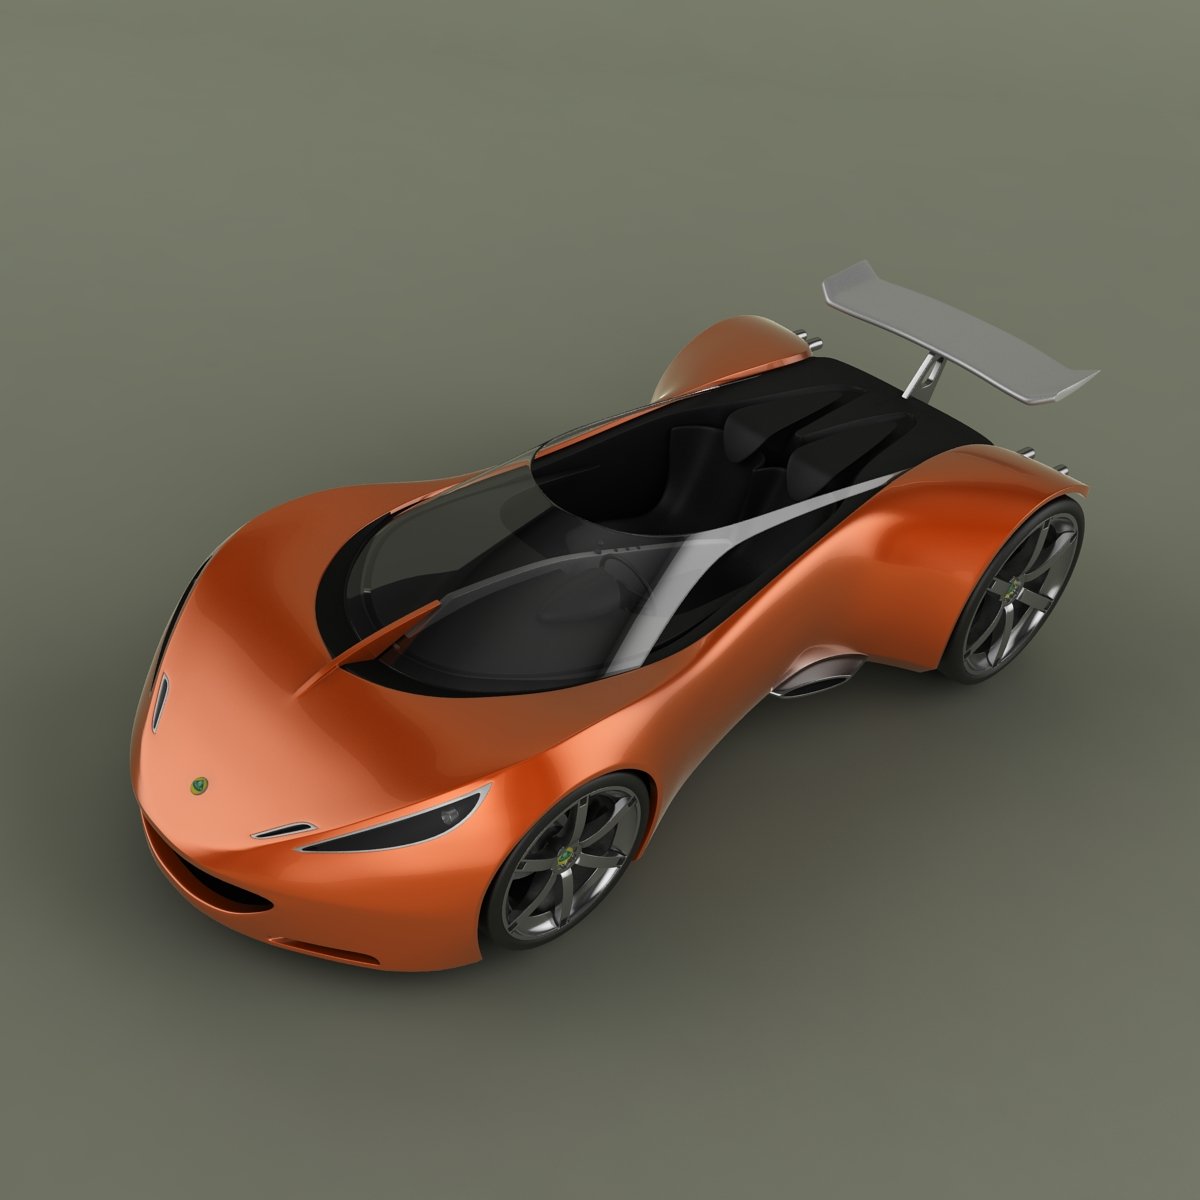 Lotus Hot Wheels Concept